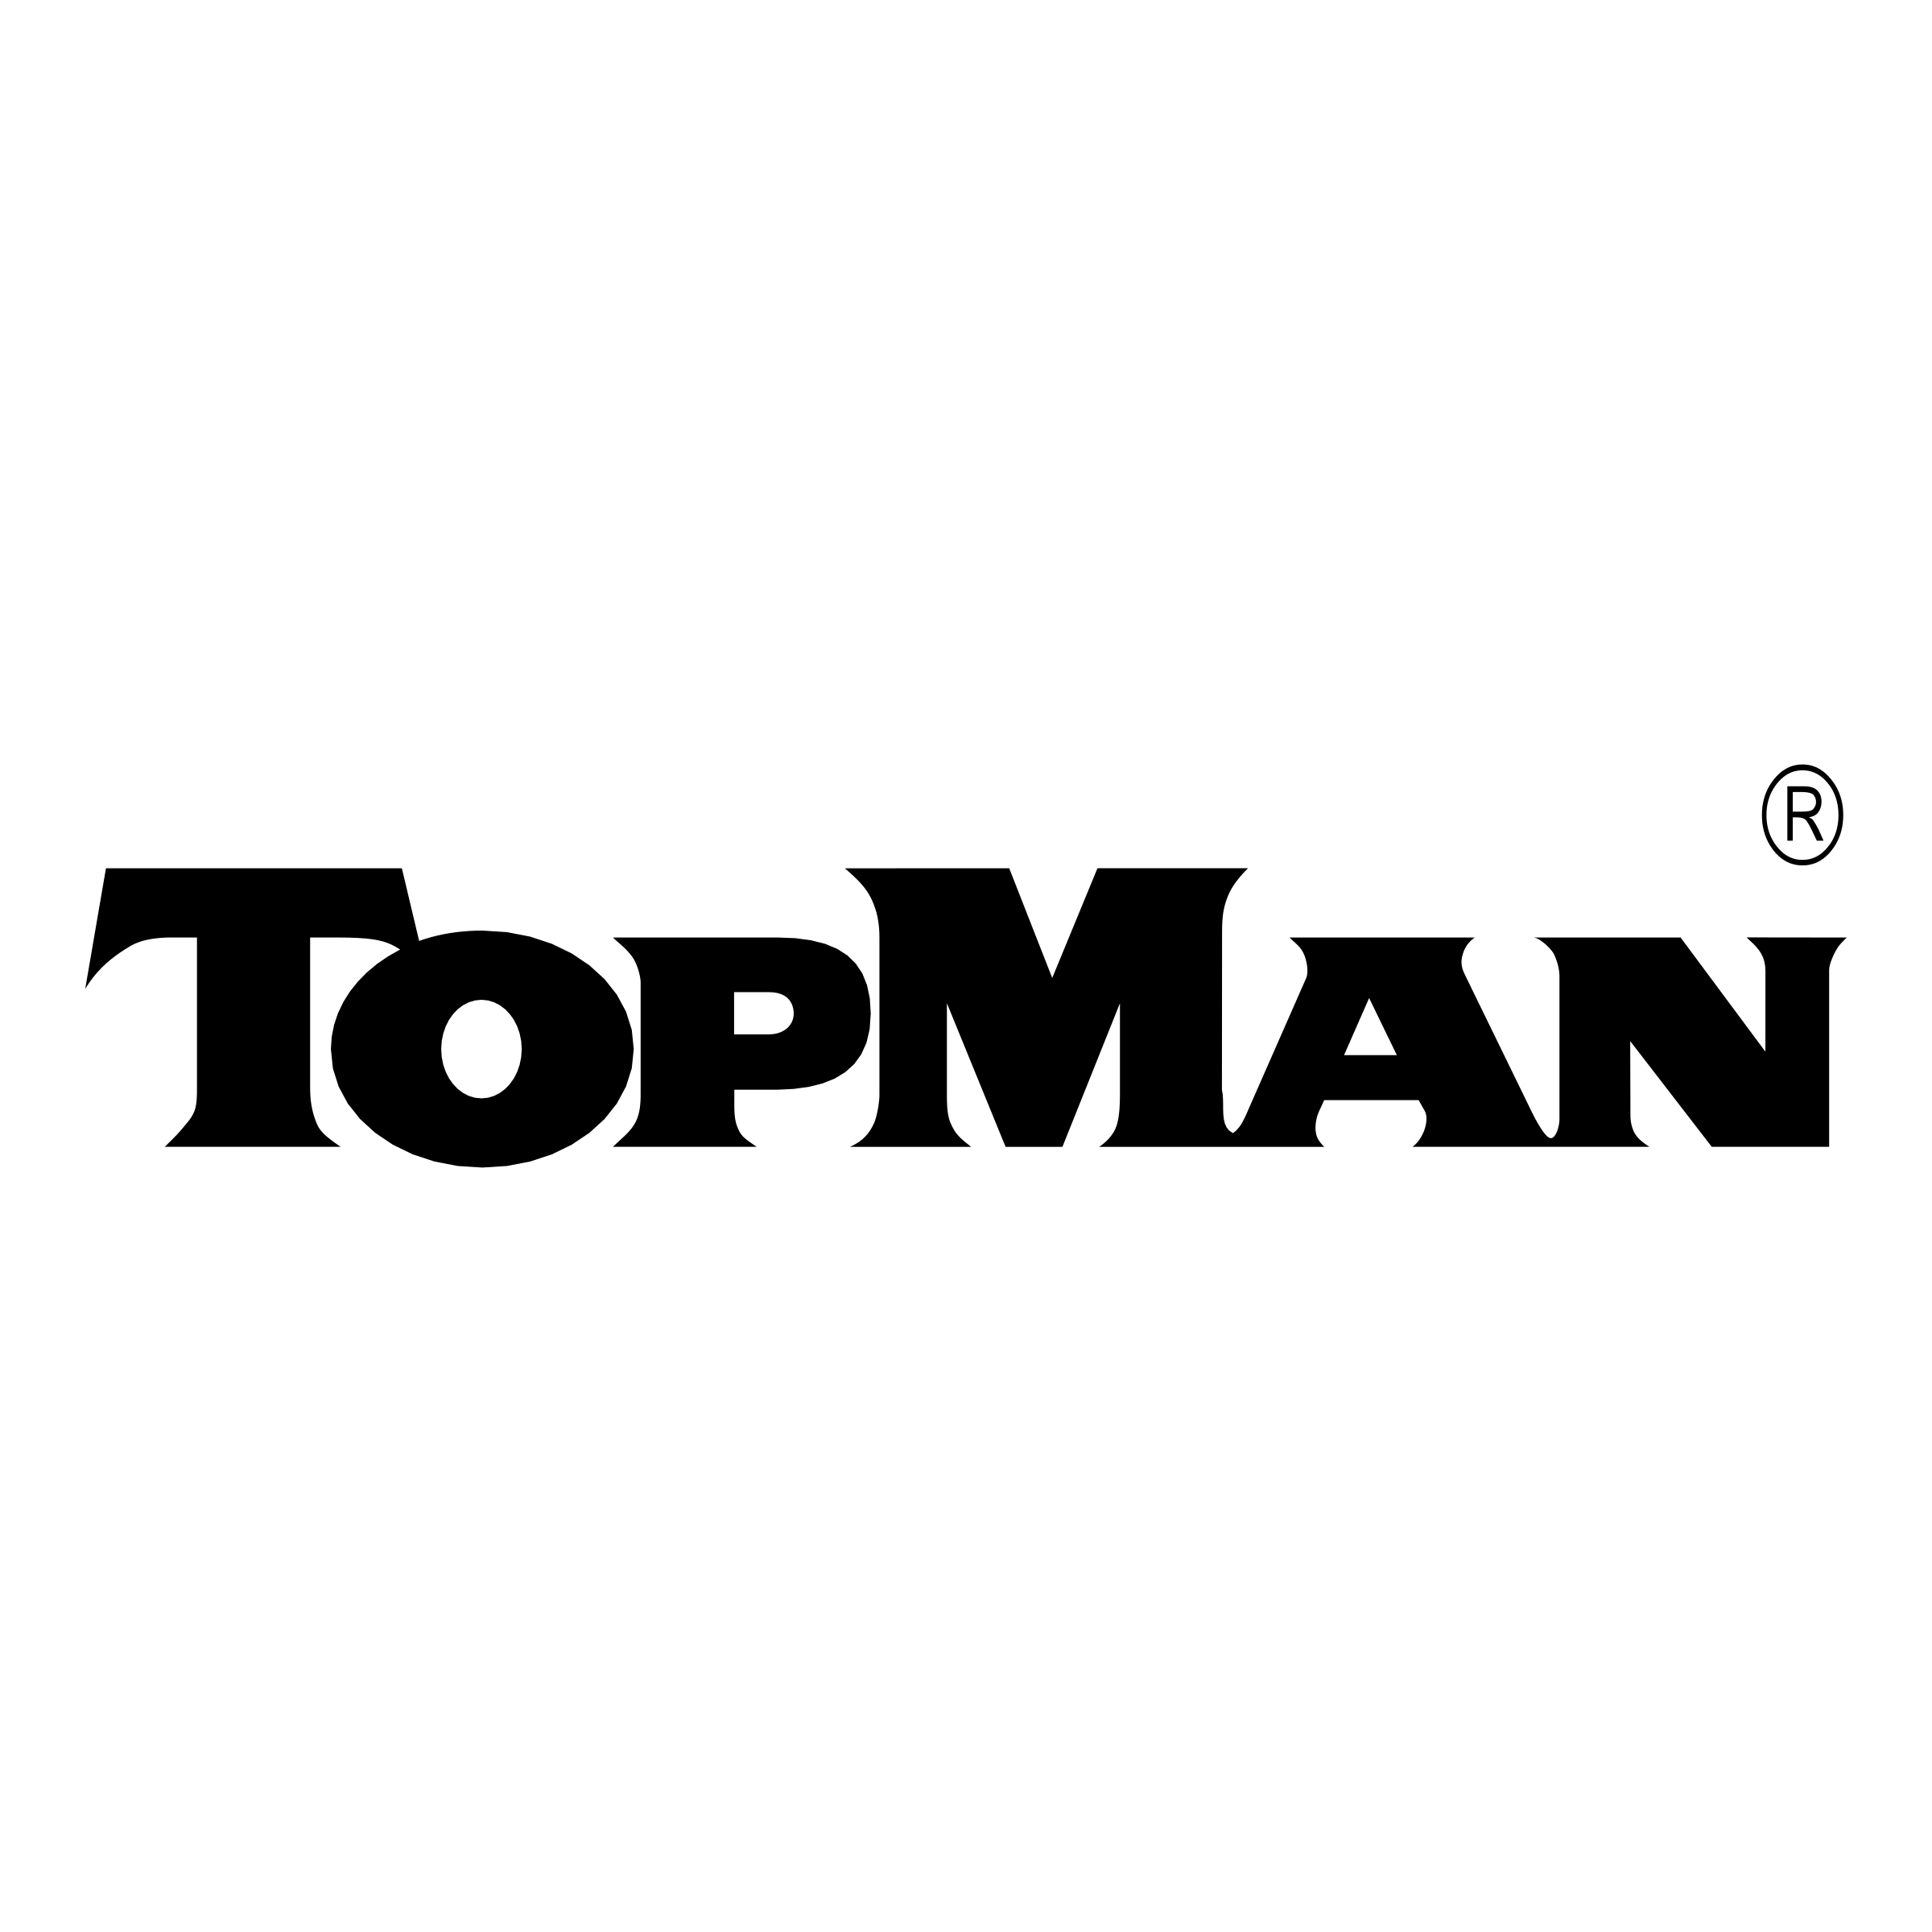 Topman Logo - TopMan Logo PNG Transparent & SVG Vector